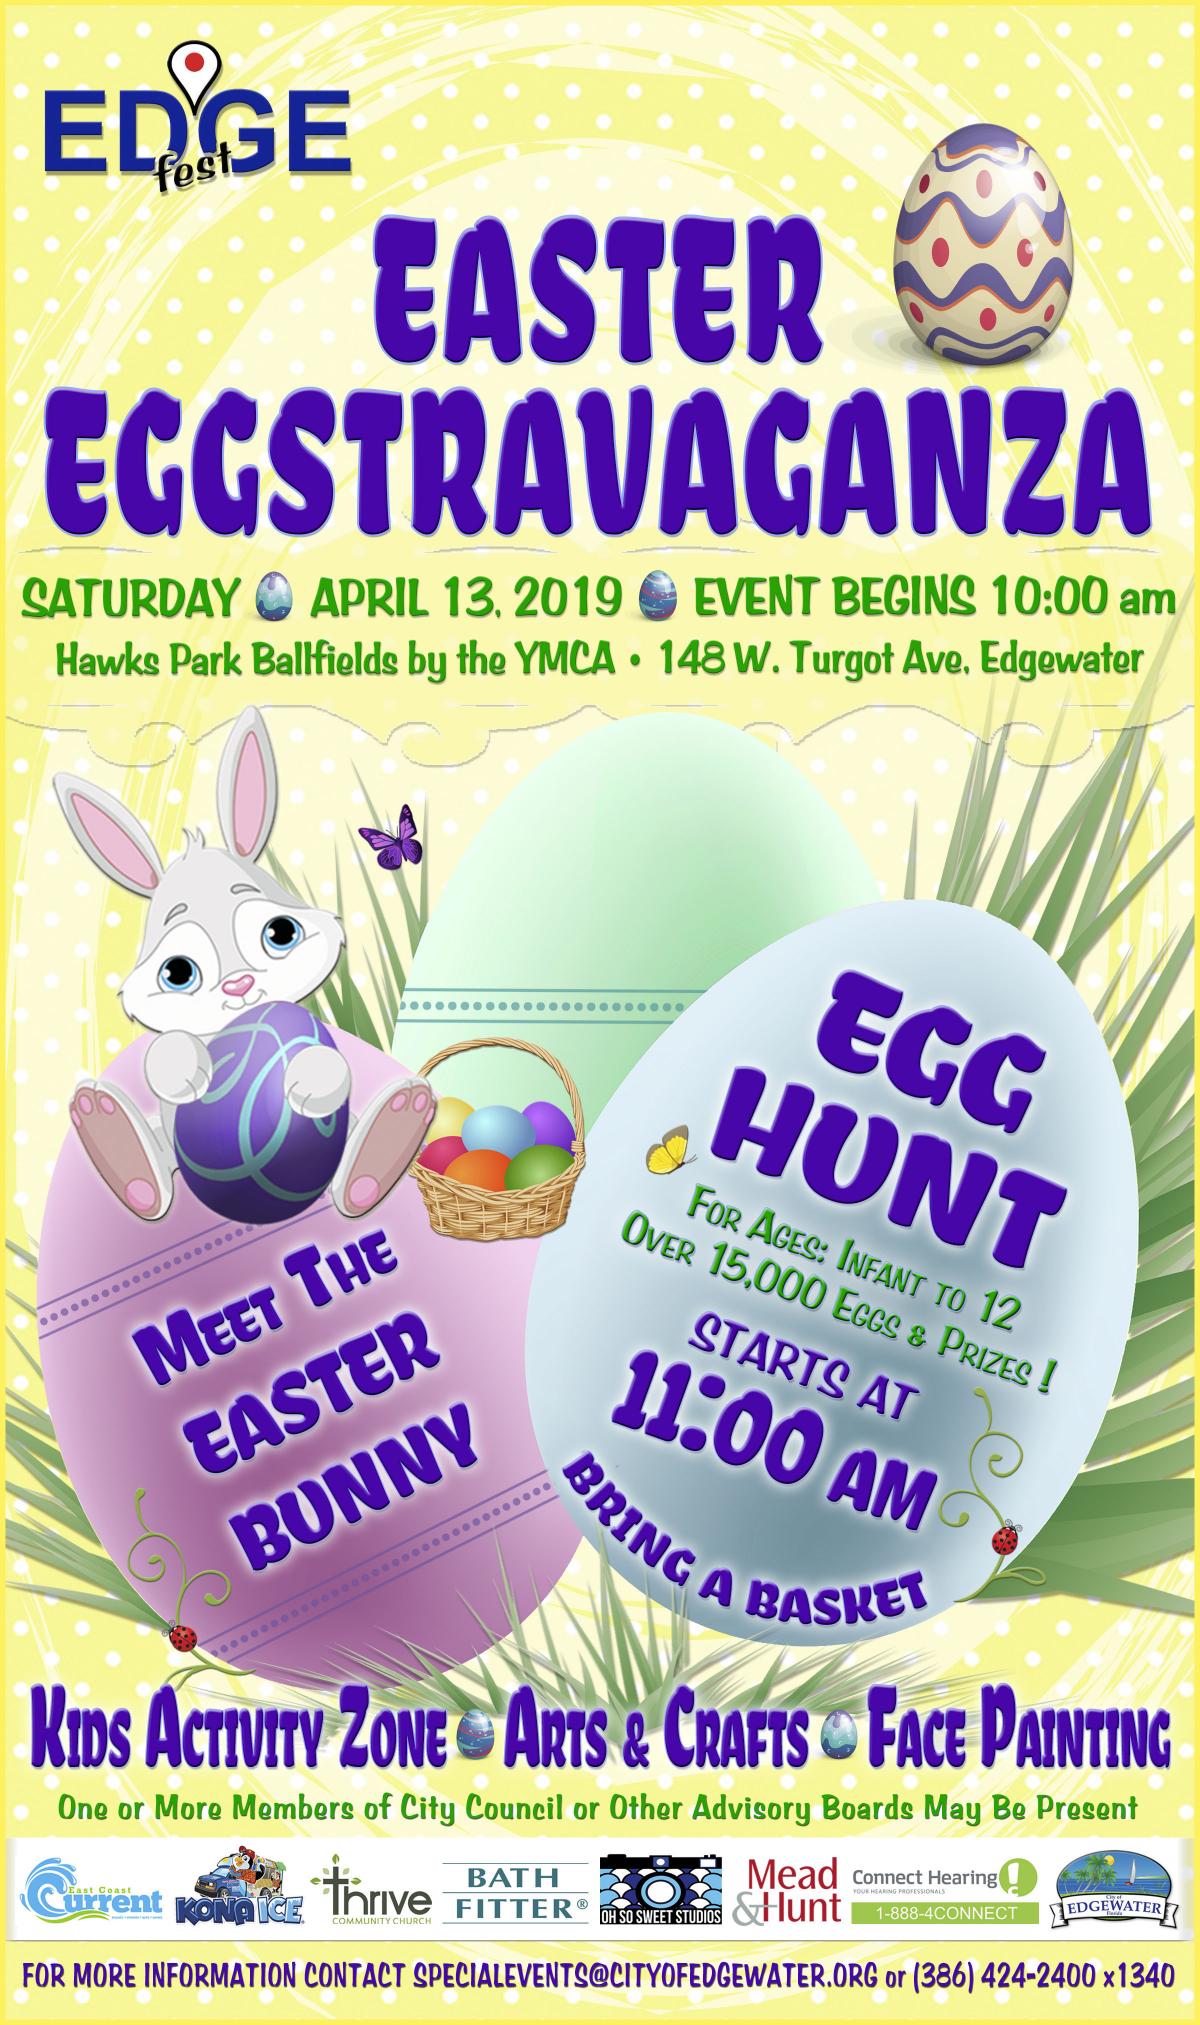 Eggstravaganza 2019 Announcement and Guide!